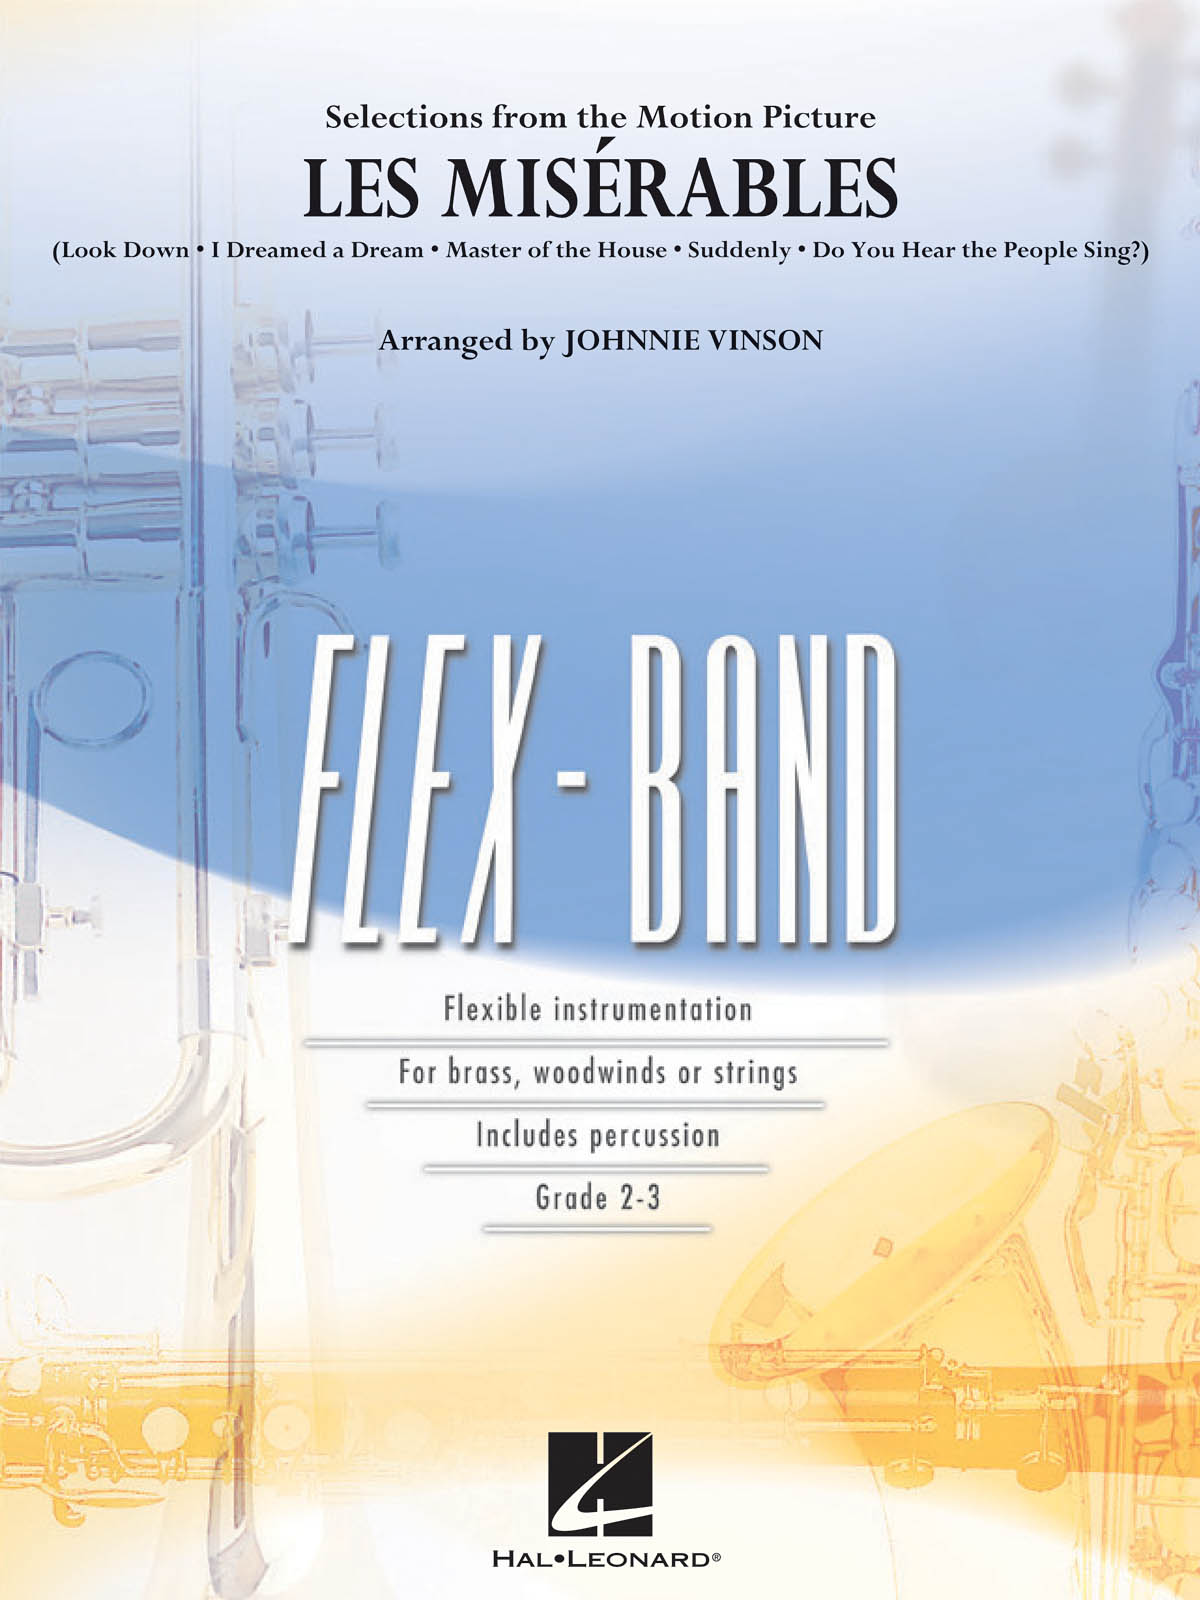 Les Misrables - Flexband: Concert Band: Score